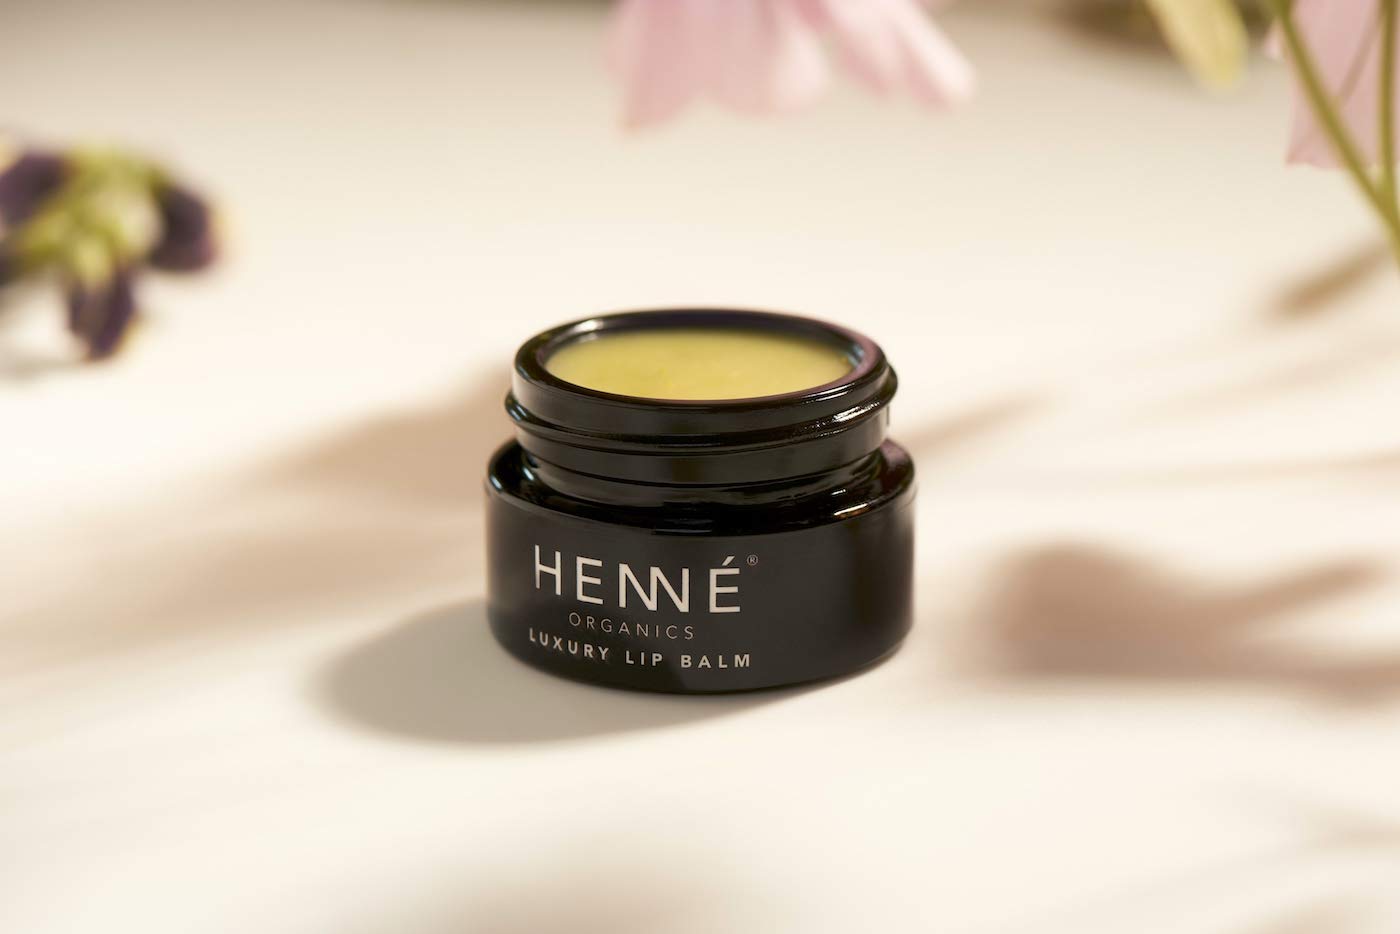 Luxury Lip Balm | HENNÈ Organics